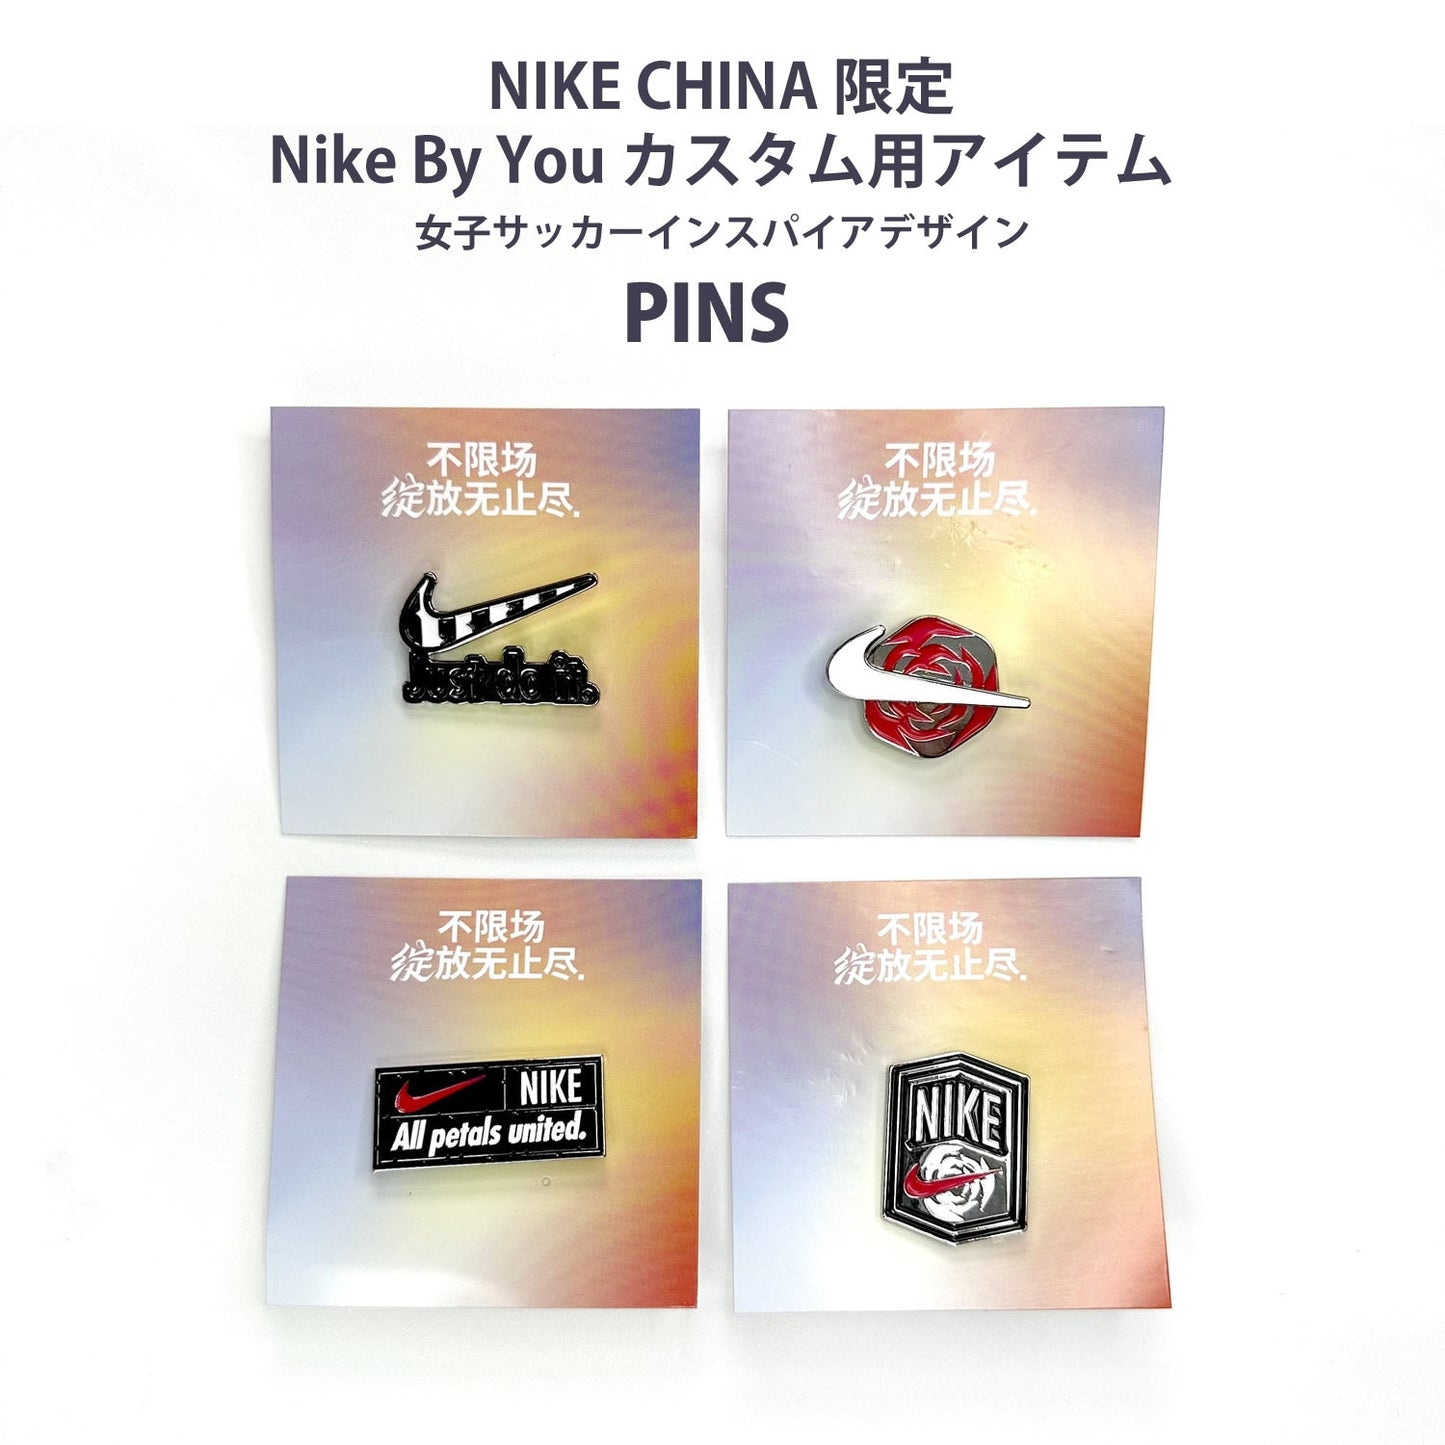 NIKE CHINA限定 Nike By You カスタムアイテム 女子サッカーインスパイアデザイン PINS ピンズ